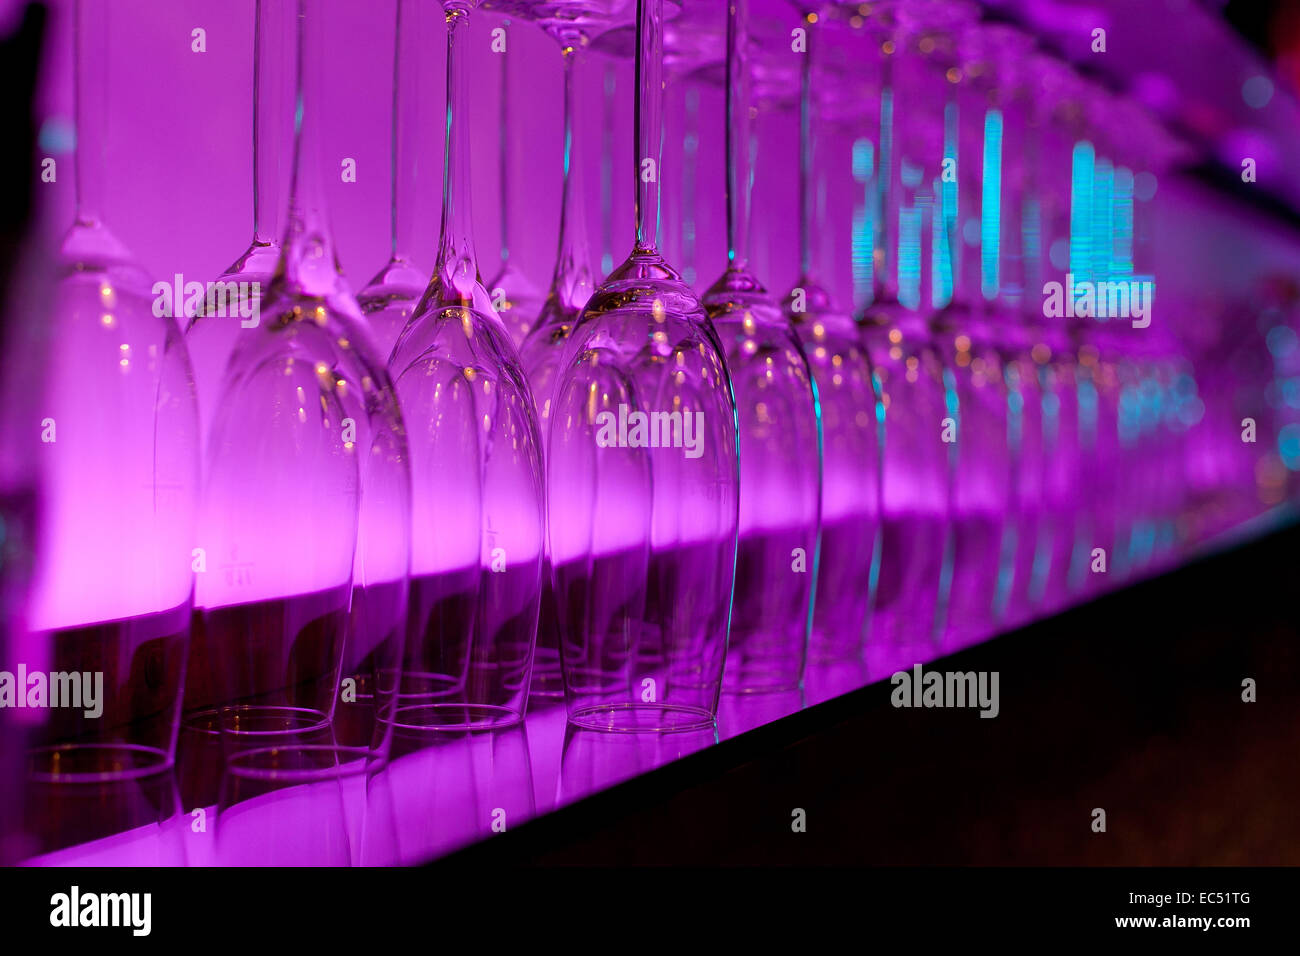 Detalle de Rosa ilumina las copas de vino en un bar. Foto de stock